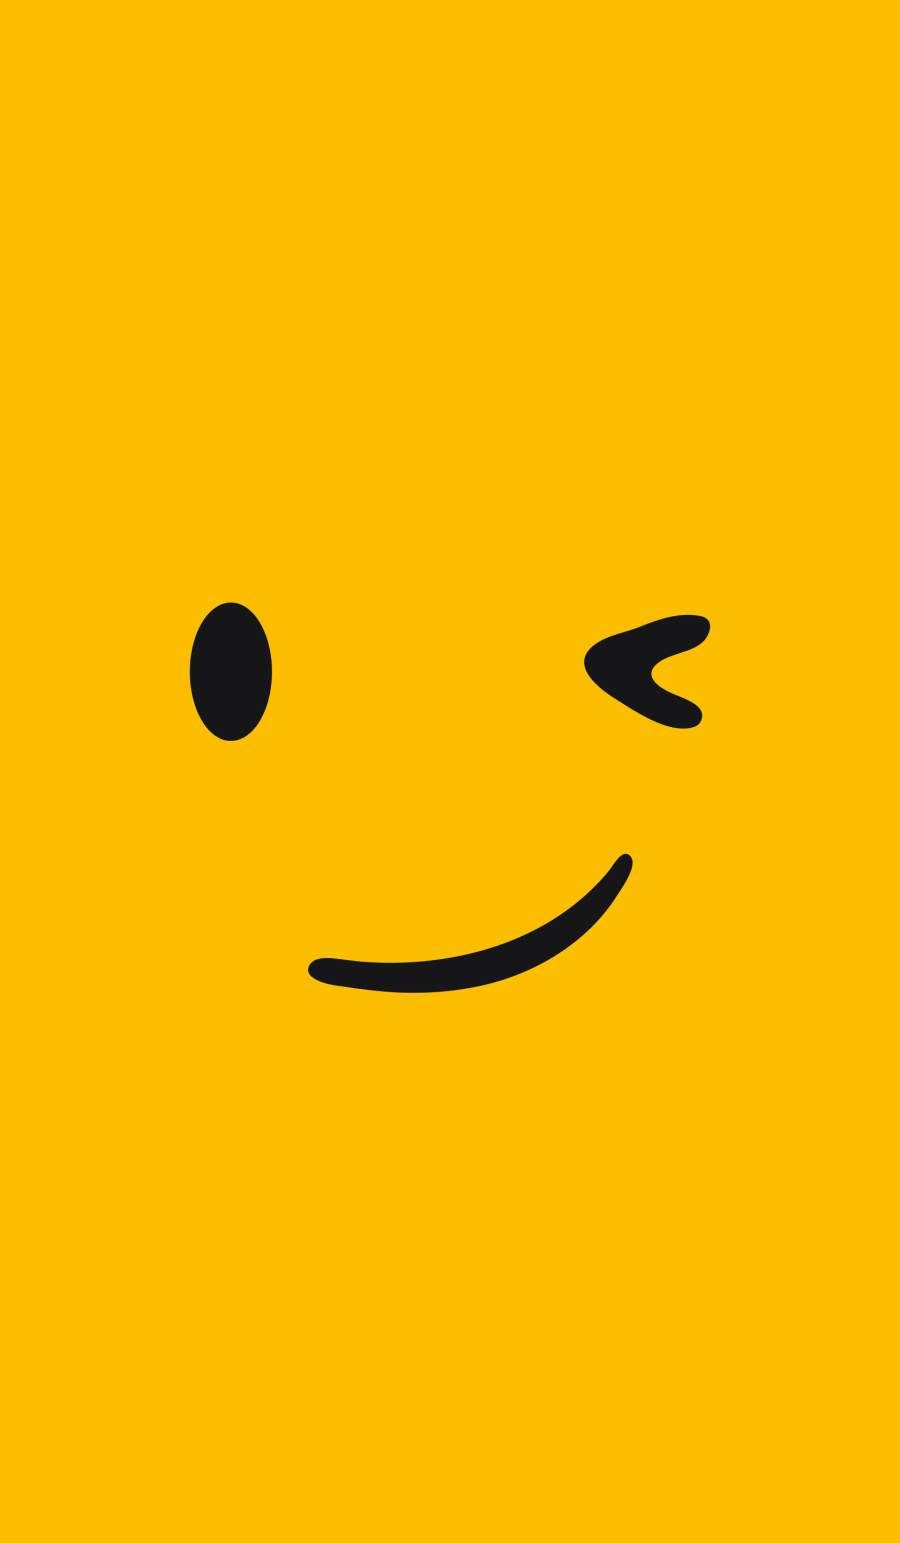 Smile Emoji iPhone Wallpaper. Emoji wallpaper iphone, iPhone wallpaper yellow, Crazy wallpaper